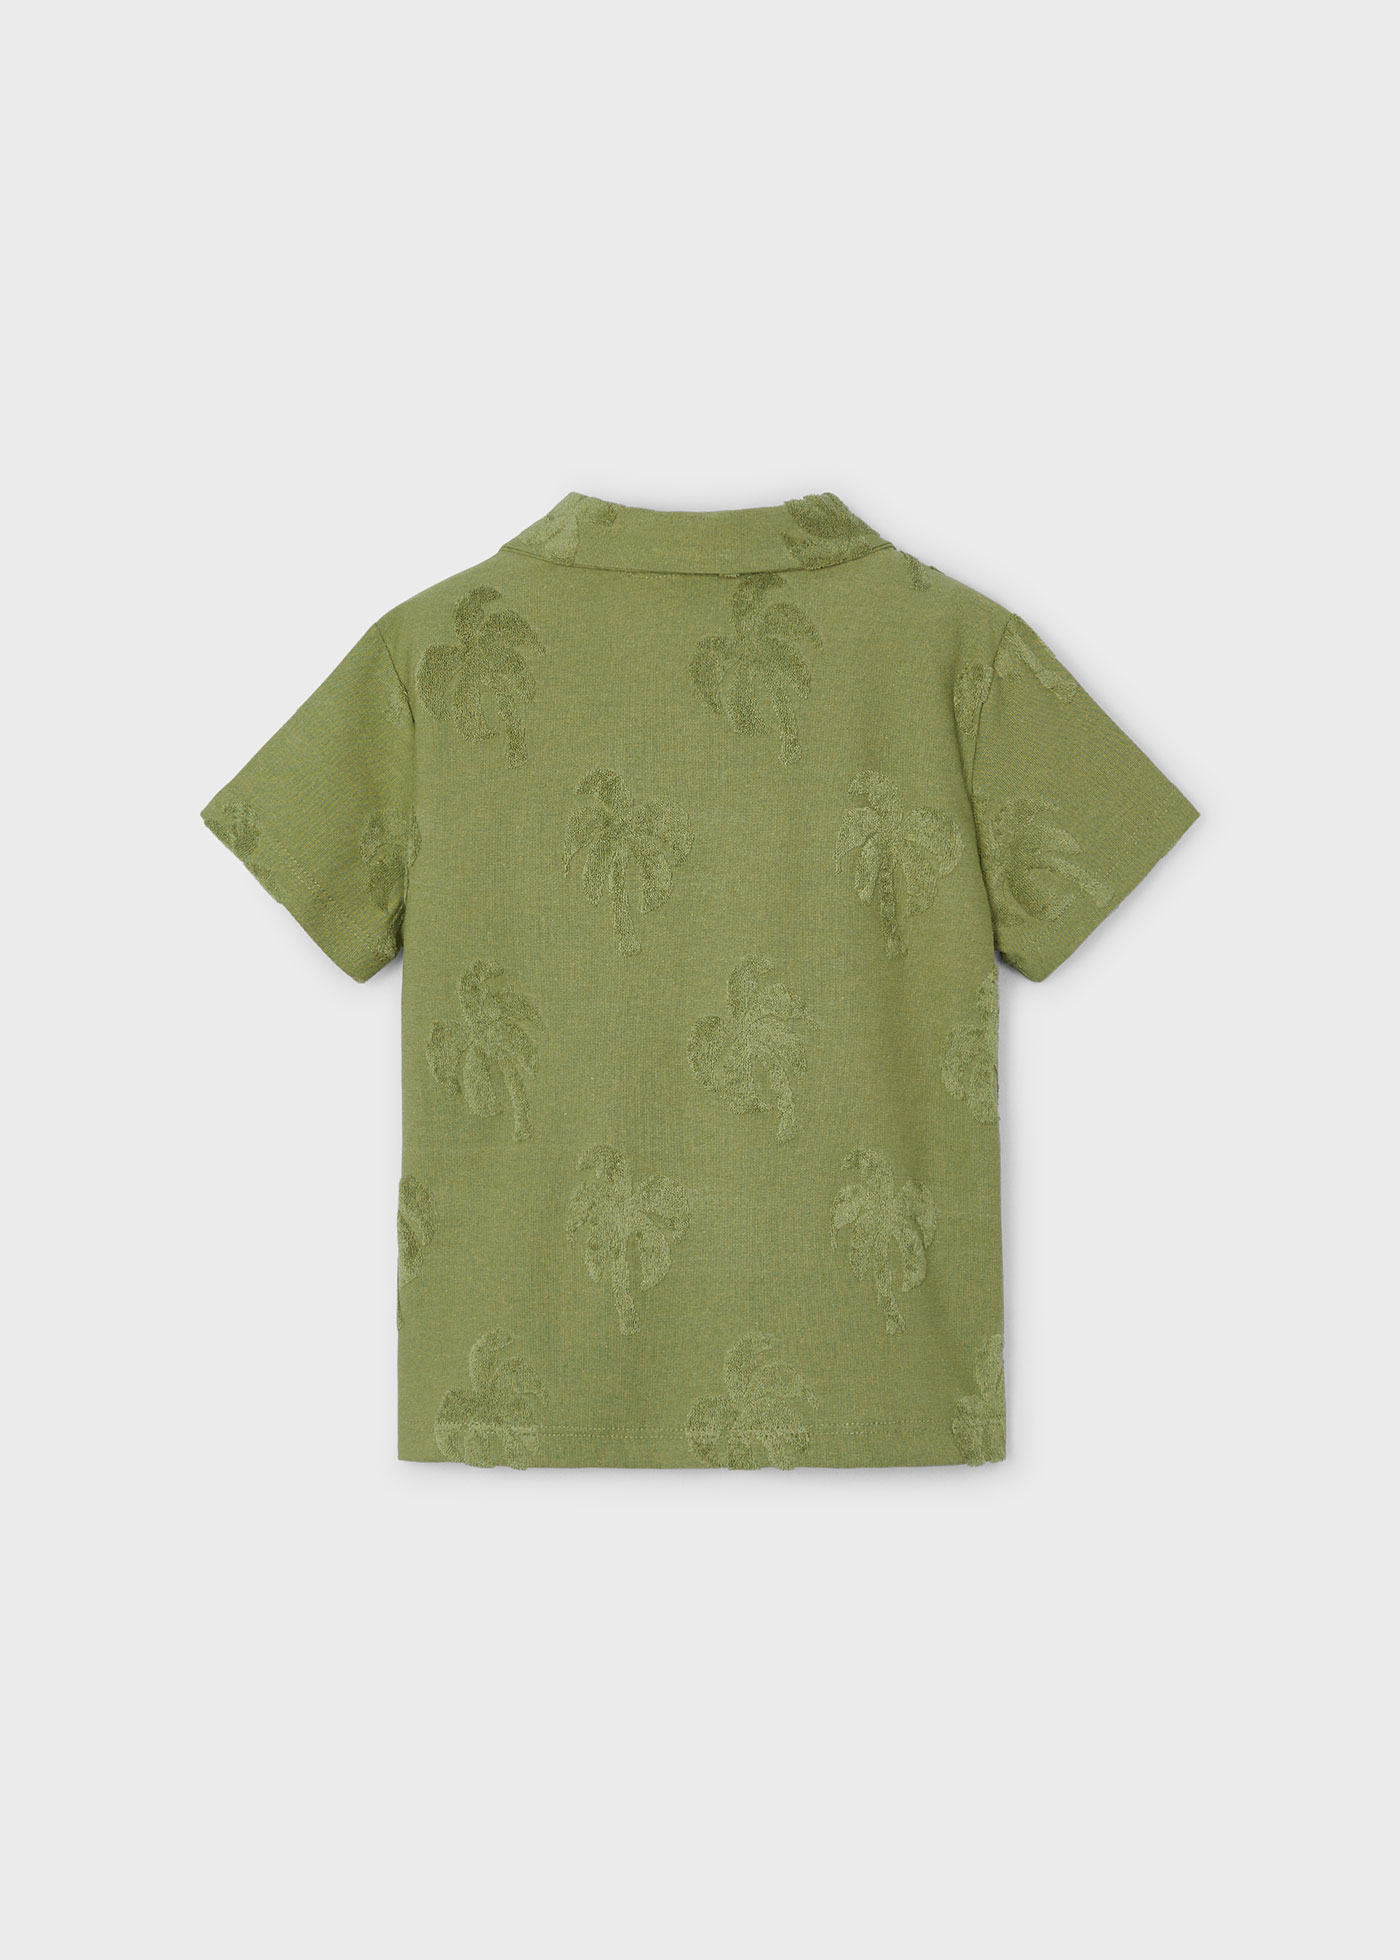 Boys polo shirt palm print